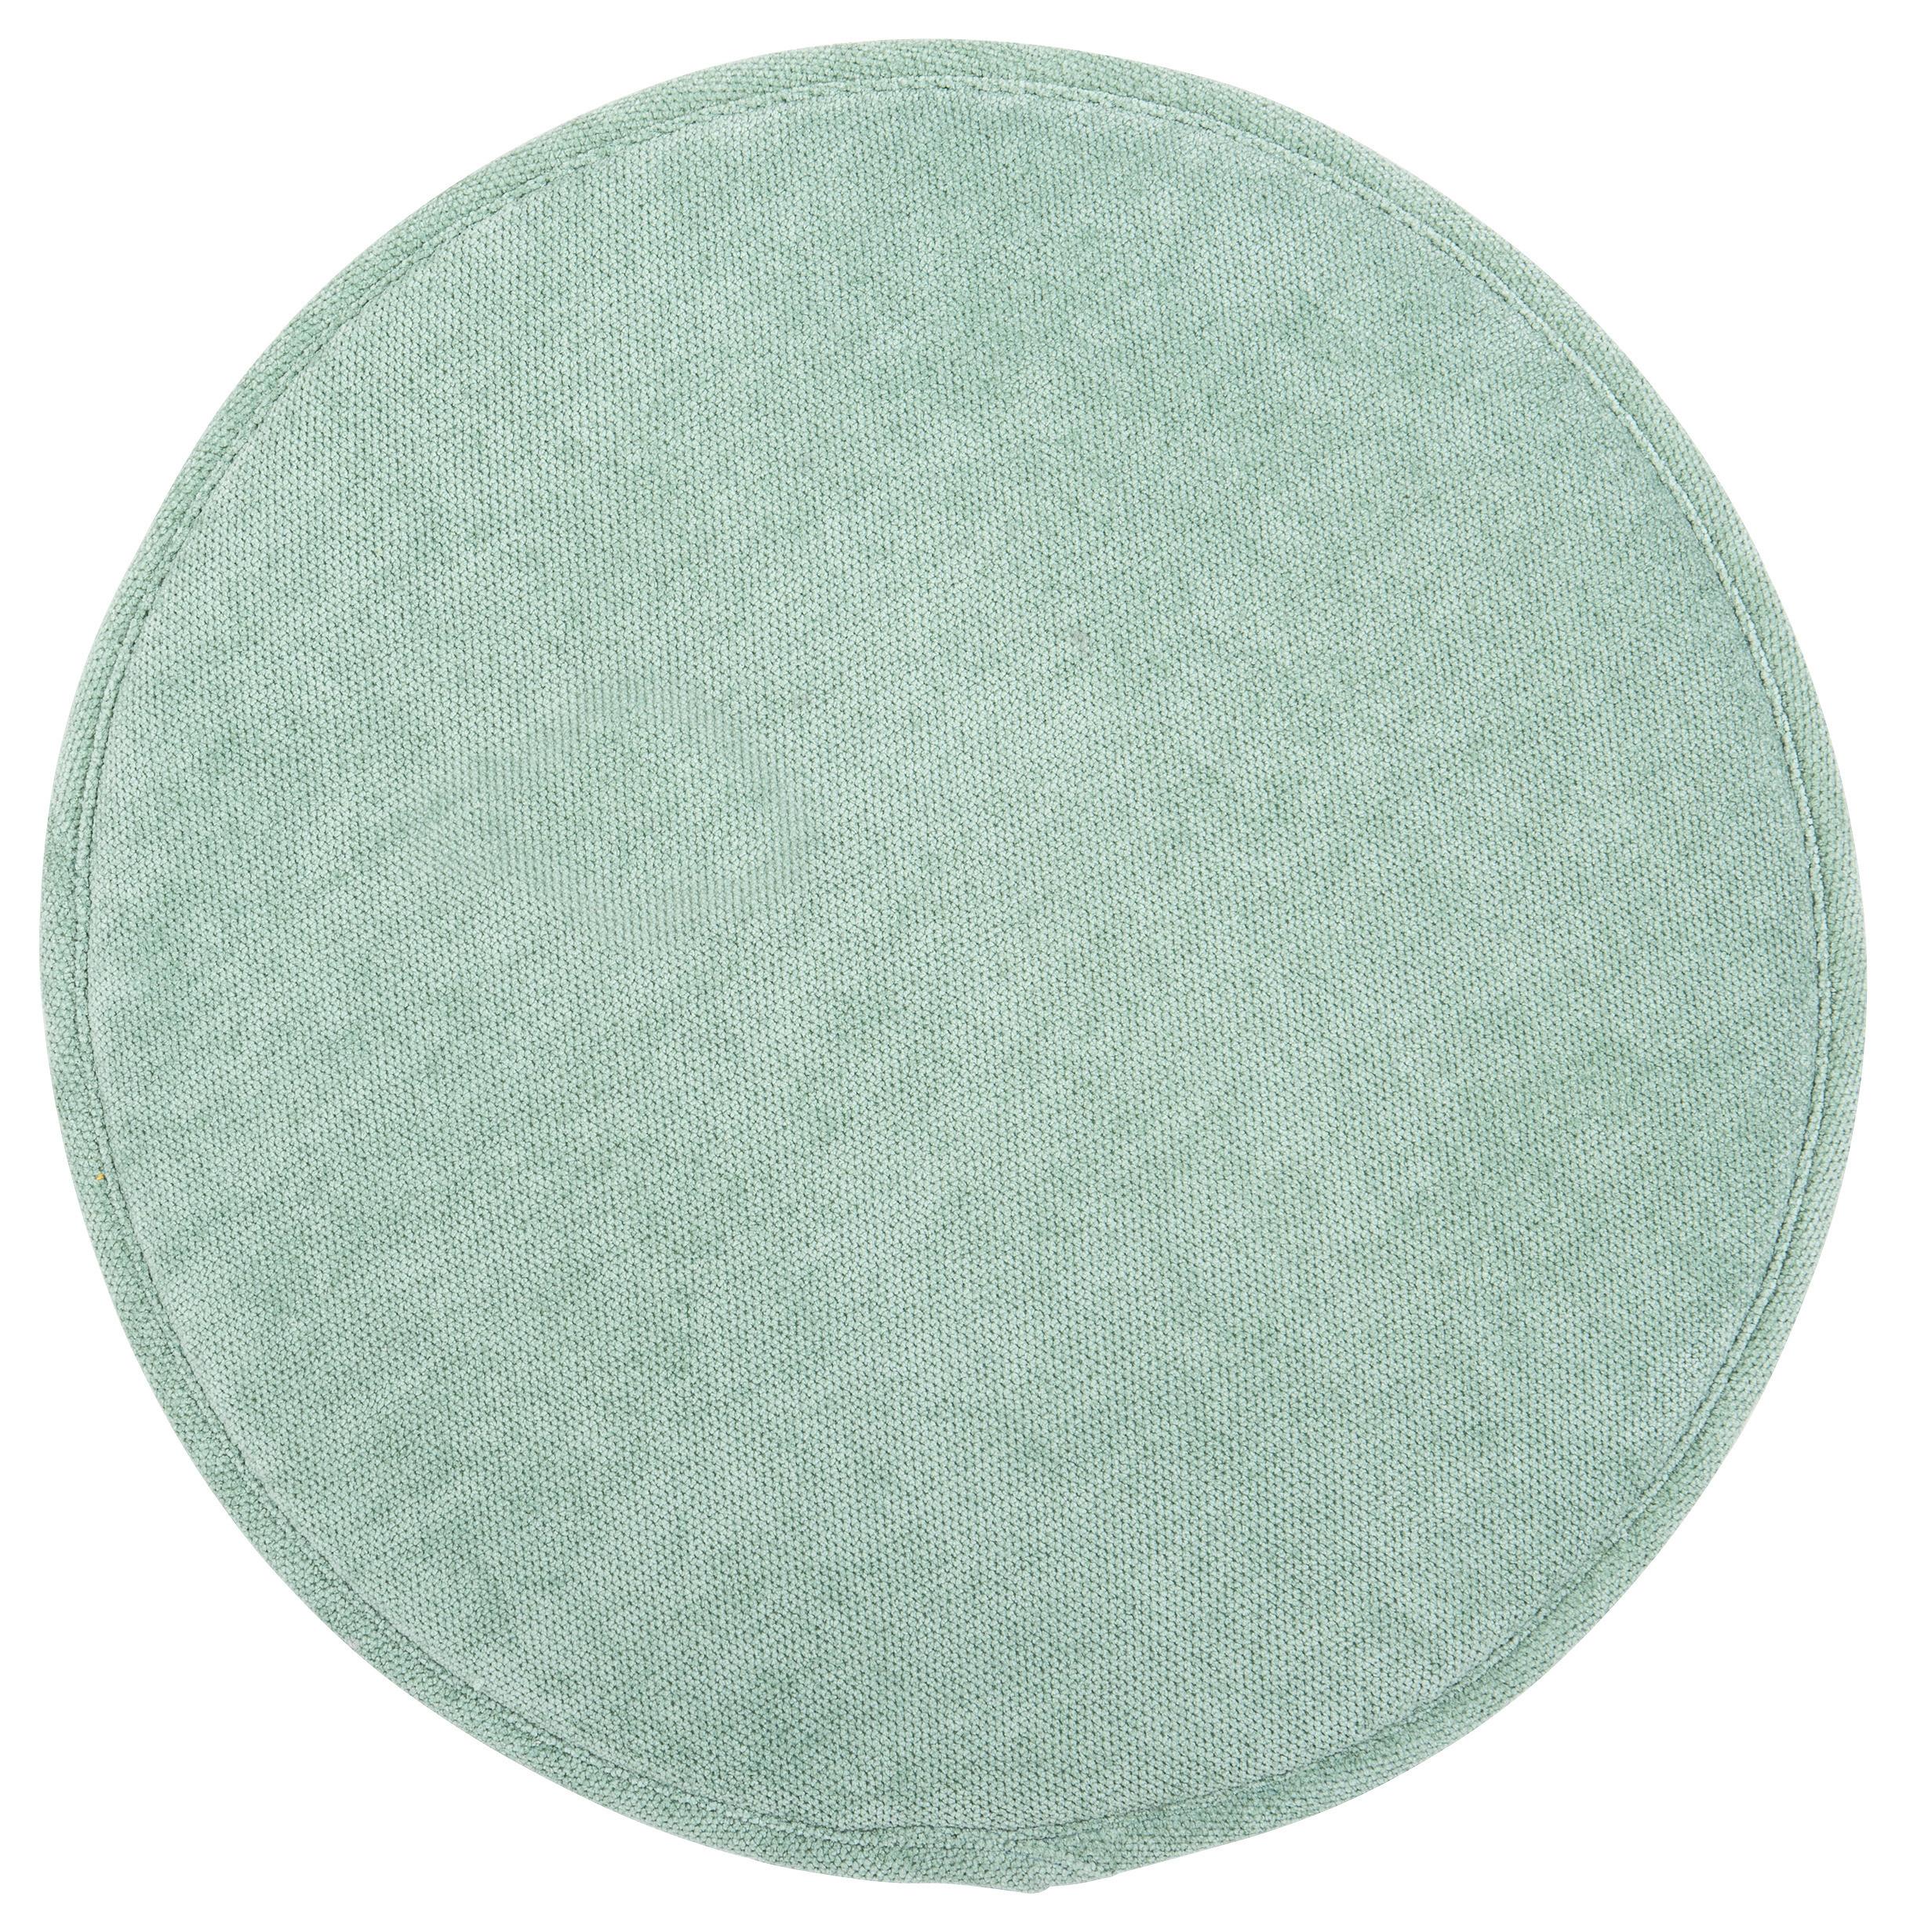 Sitzkissen Campino Mintgrün ⌀ 38 cm Polyester - Mintgrün, MODERN, Textil (38/2,5cm) - Luca Bessoni